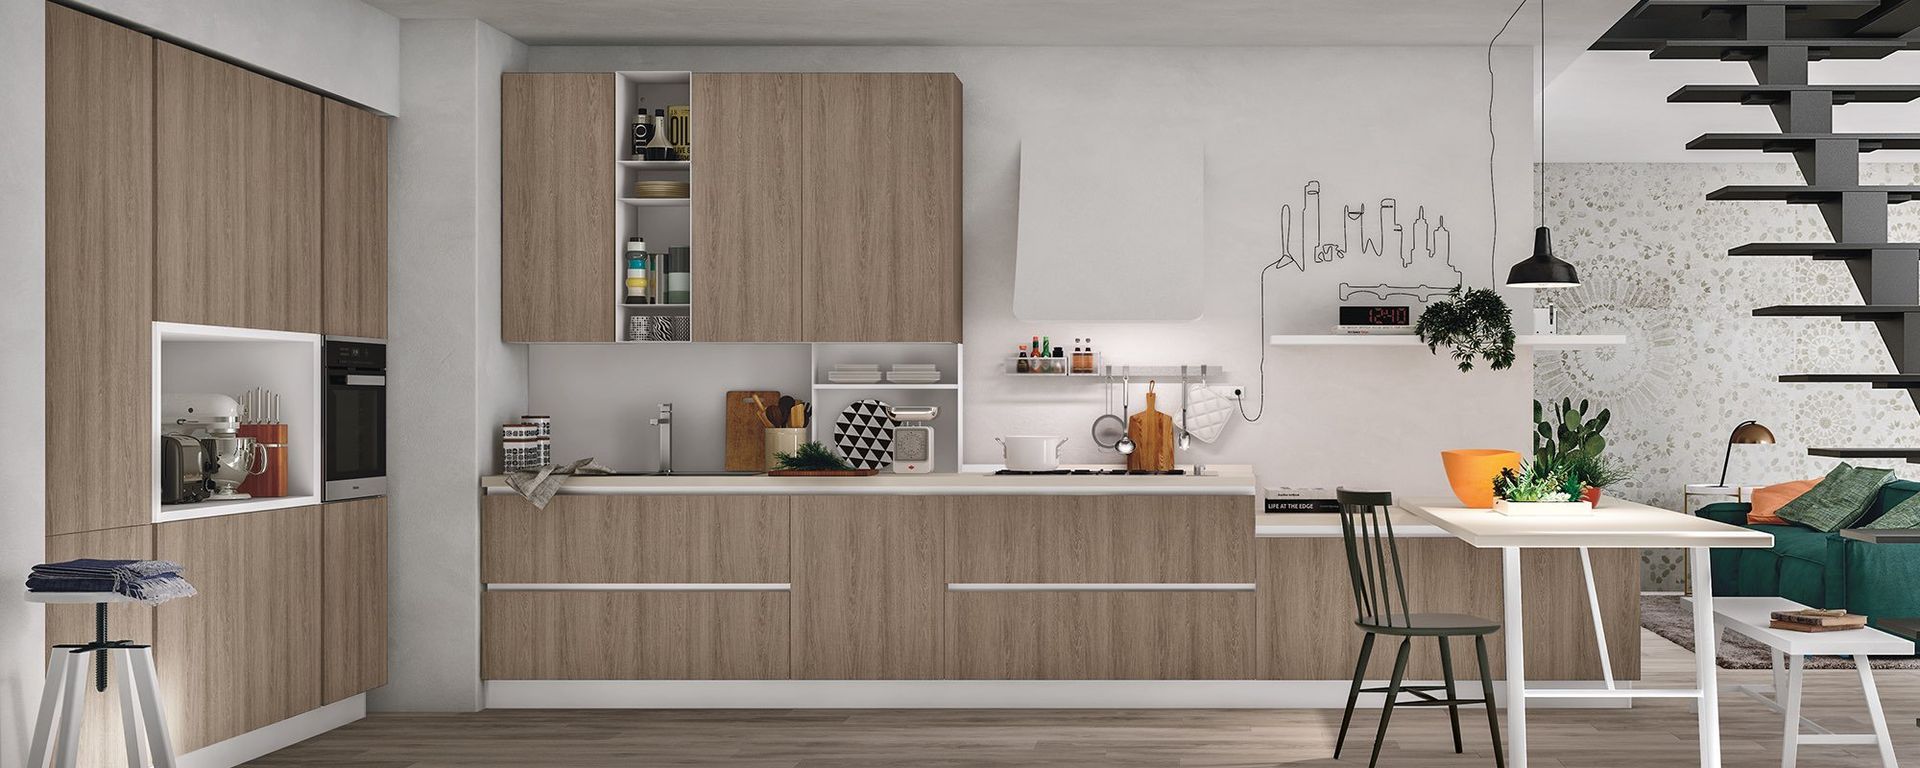 cucina moderna e classica color legno